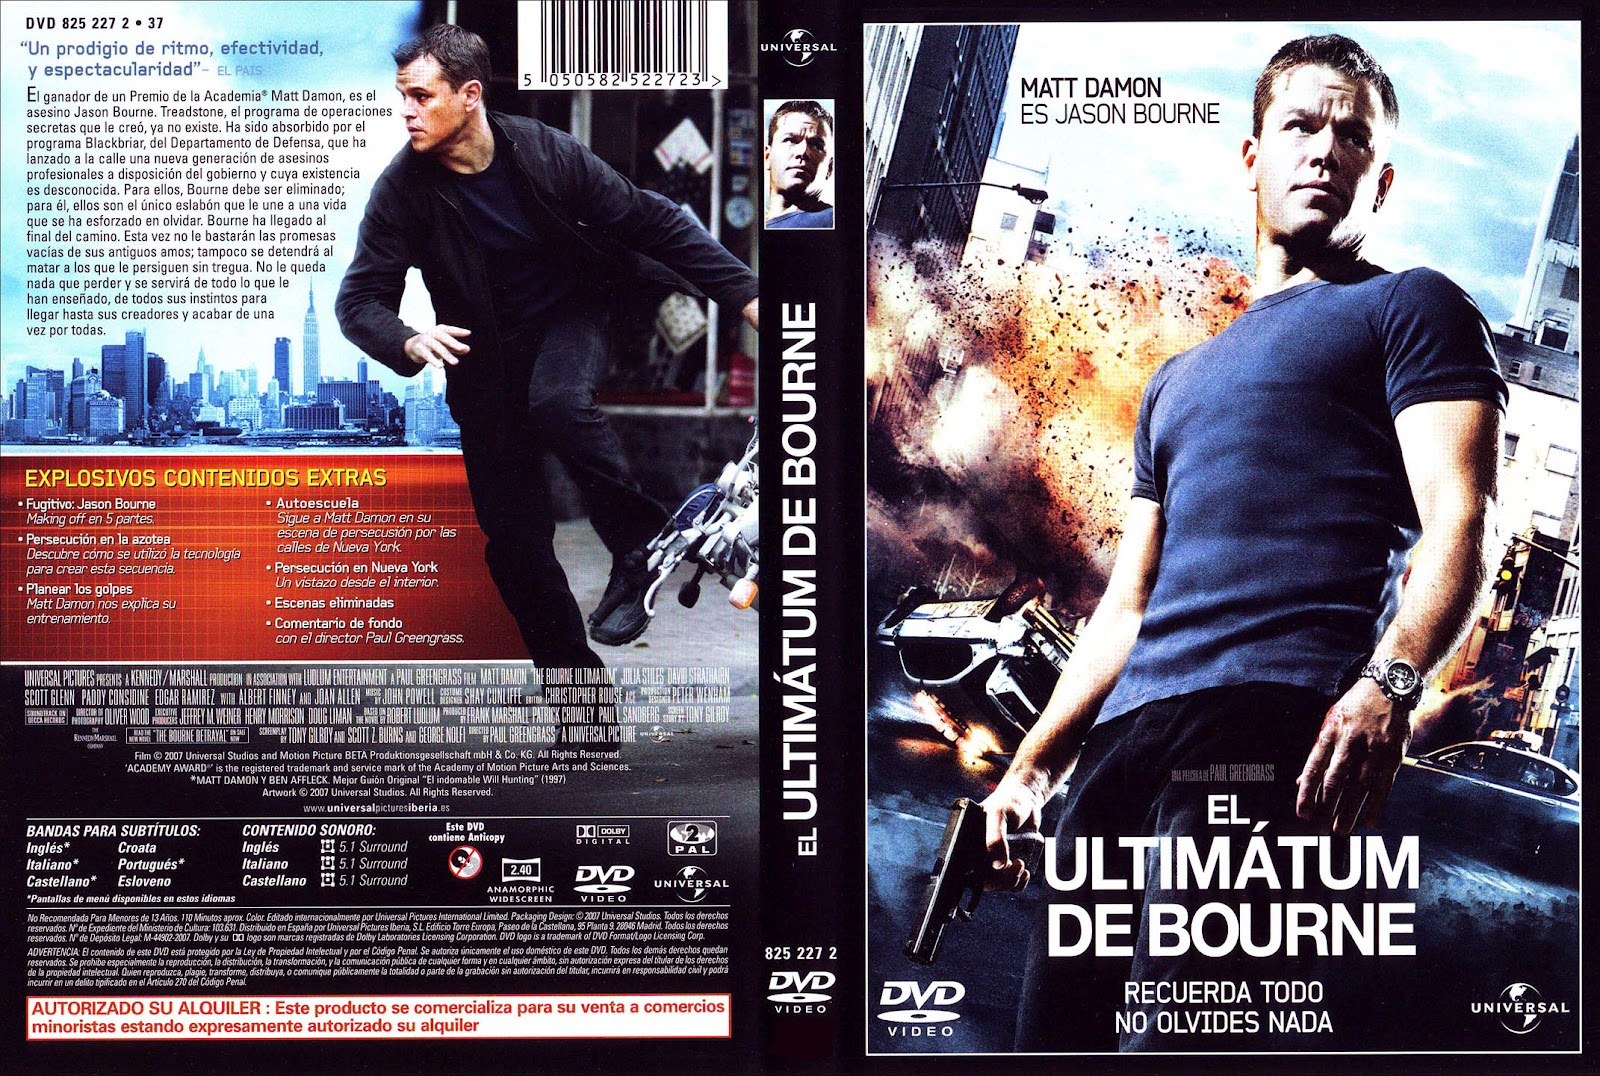 The Bourne Ultimatum 2007 Dvdrip,Xvid